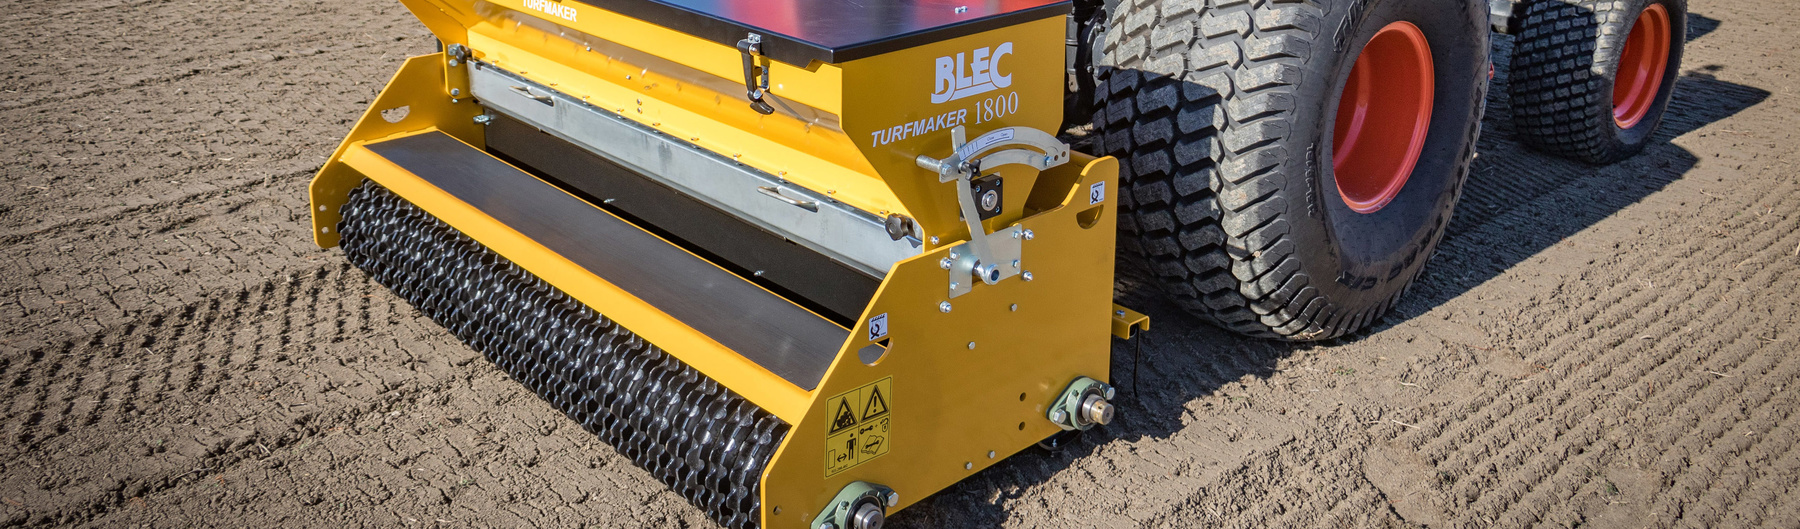 BLEC Turfmakerr-New